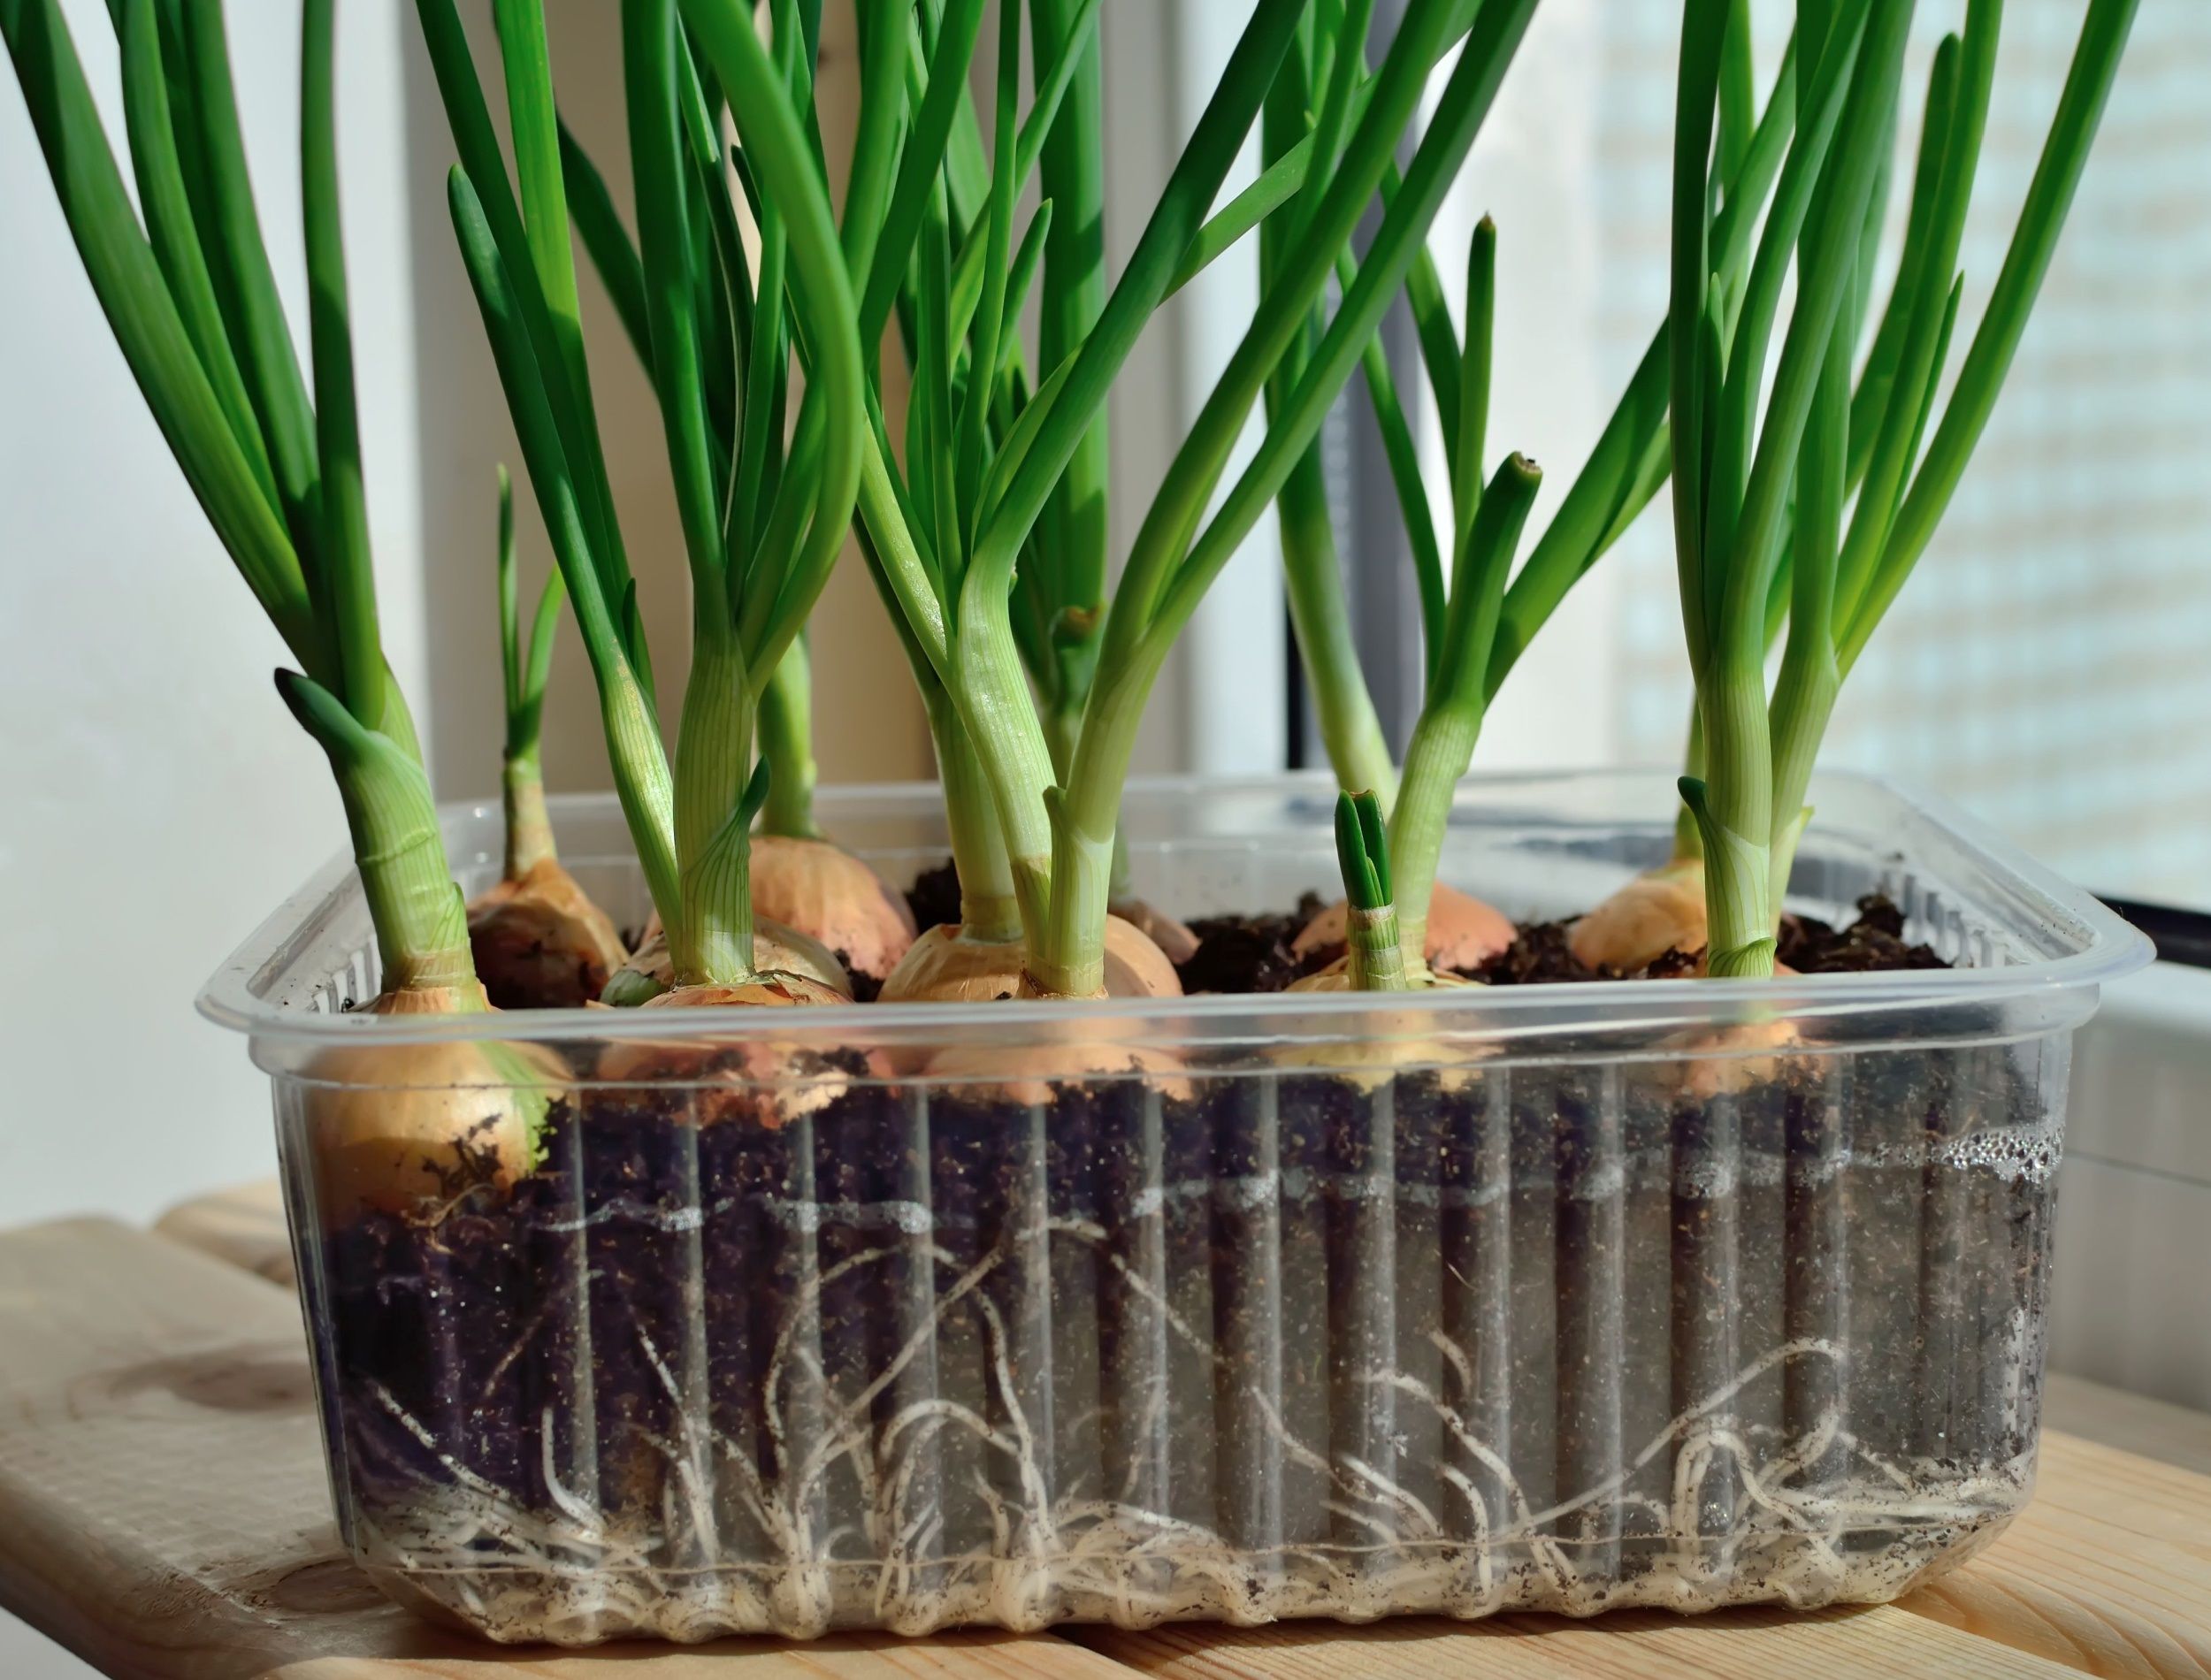 Green onions grow on the windowsill in a plastic pot